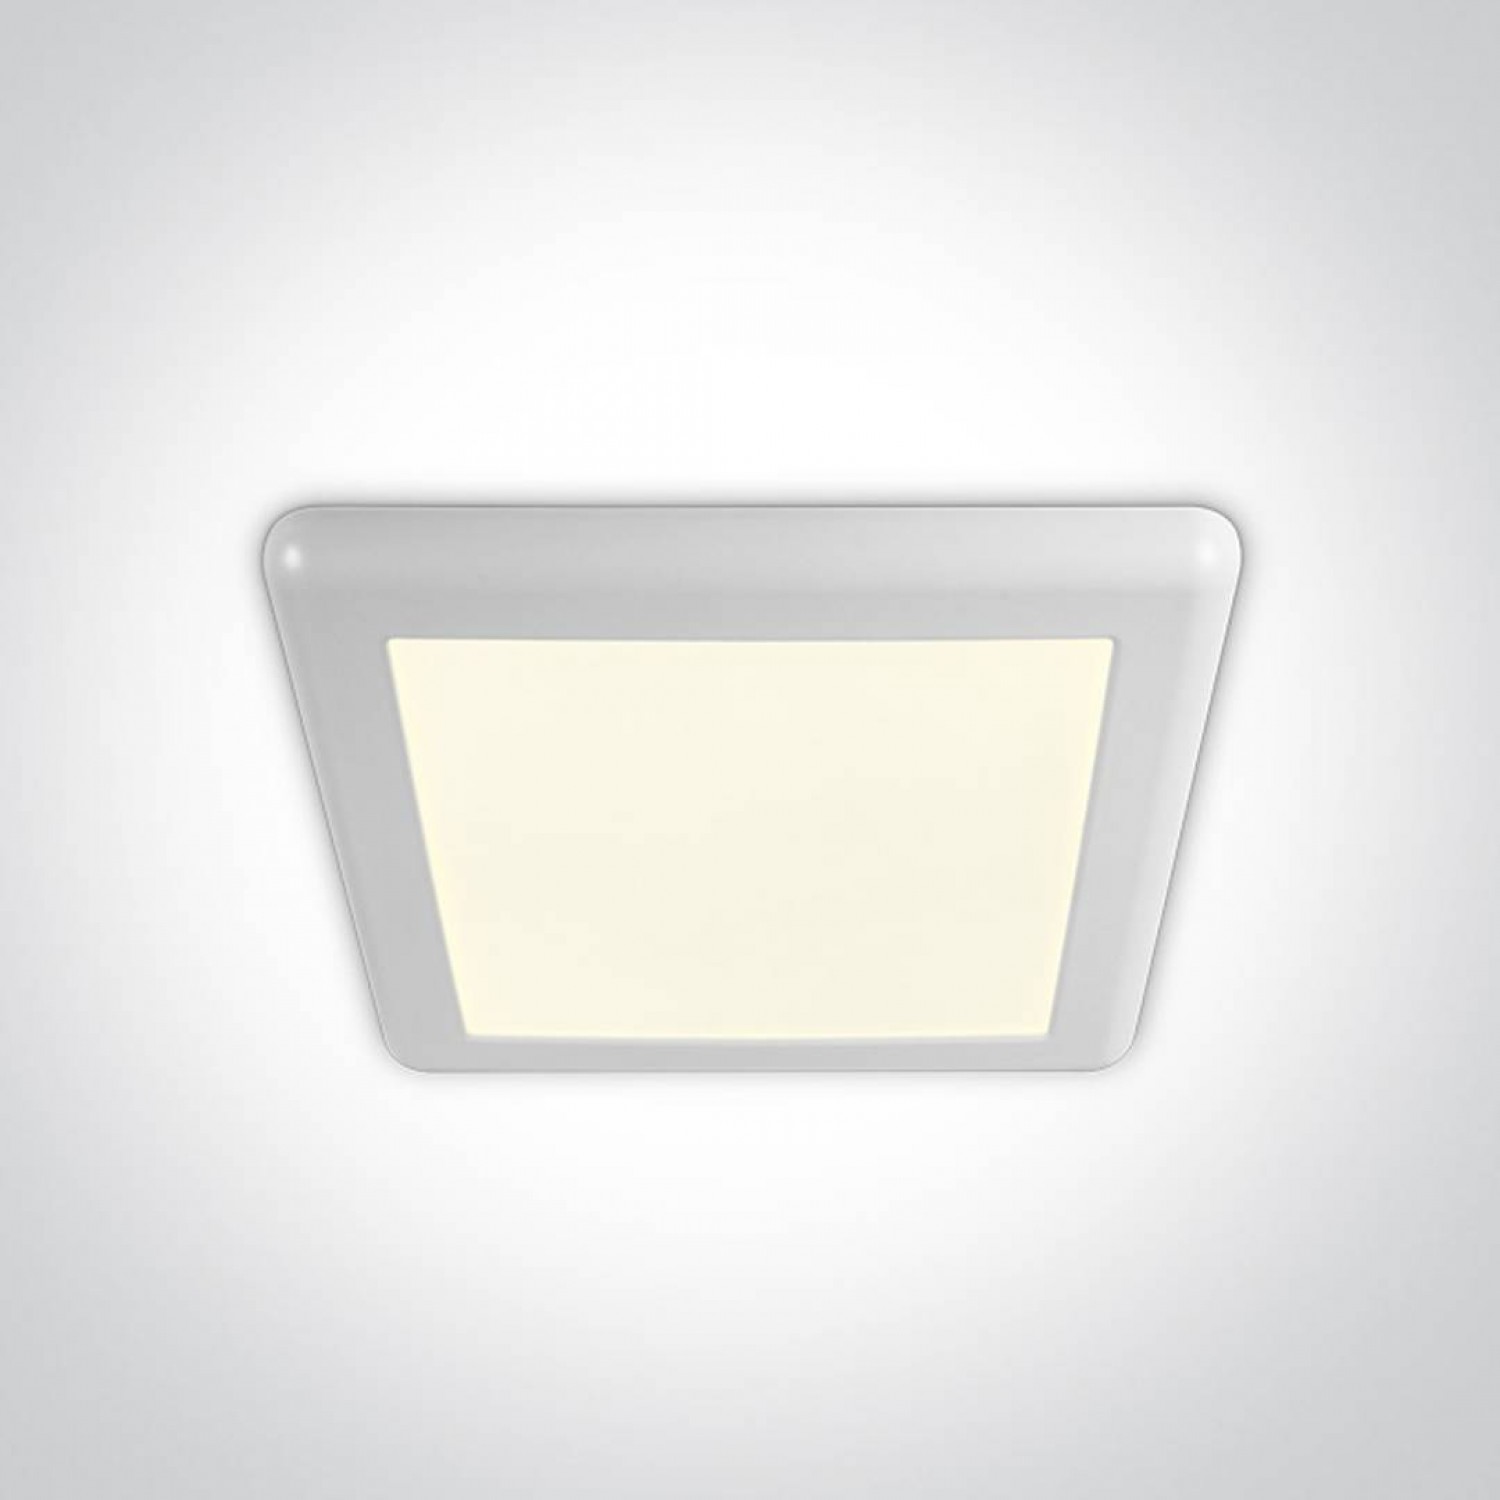 alt_image Точечный светильник ONE Light Surface/Recessed Panels Adjustable Cut Out Hole 62116FA/W/W